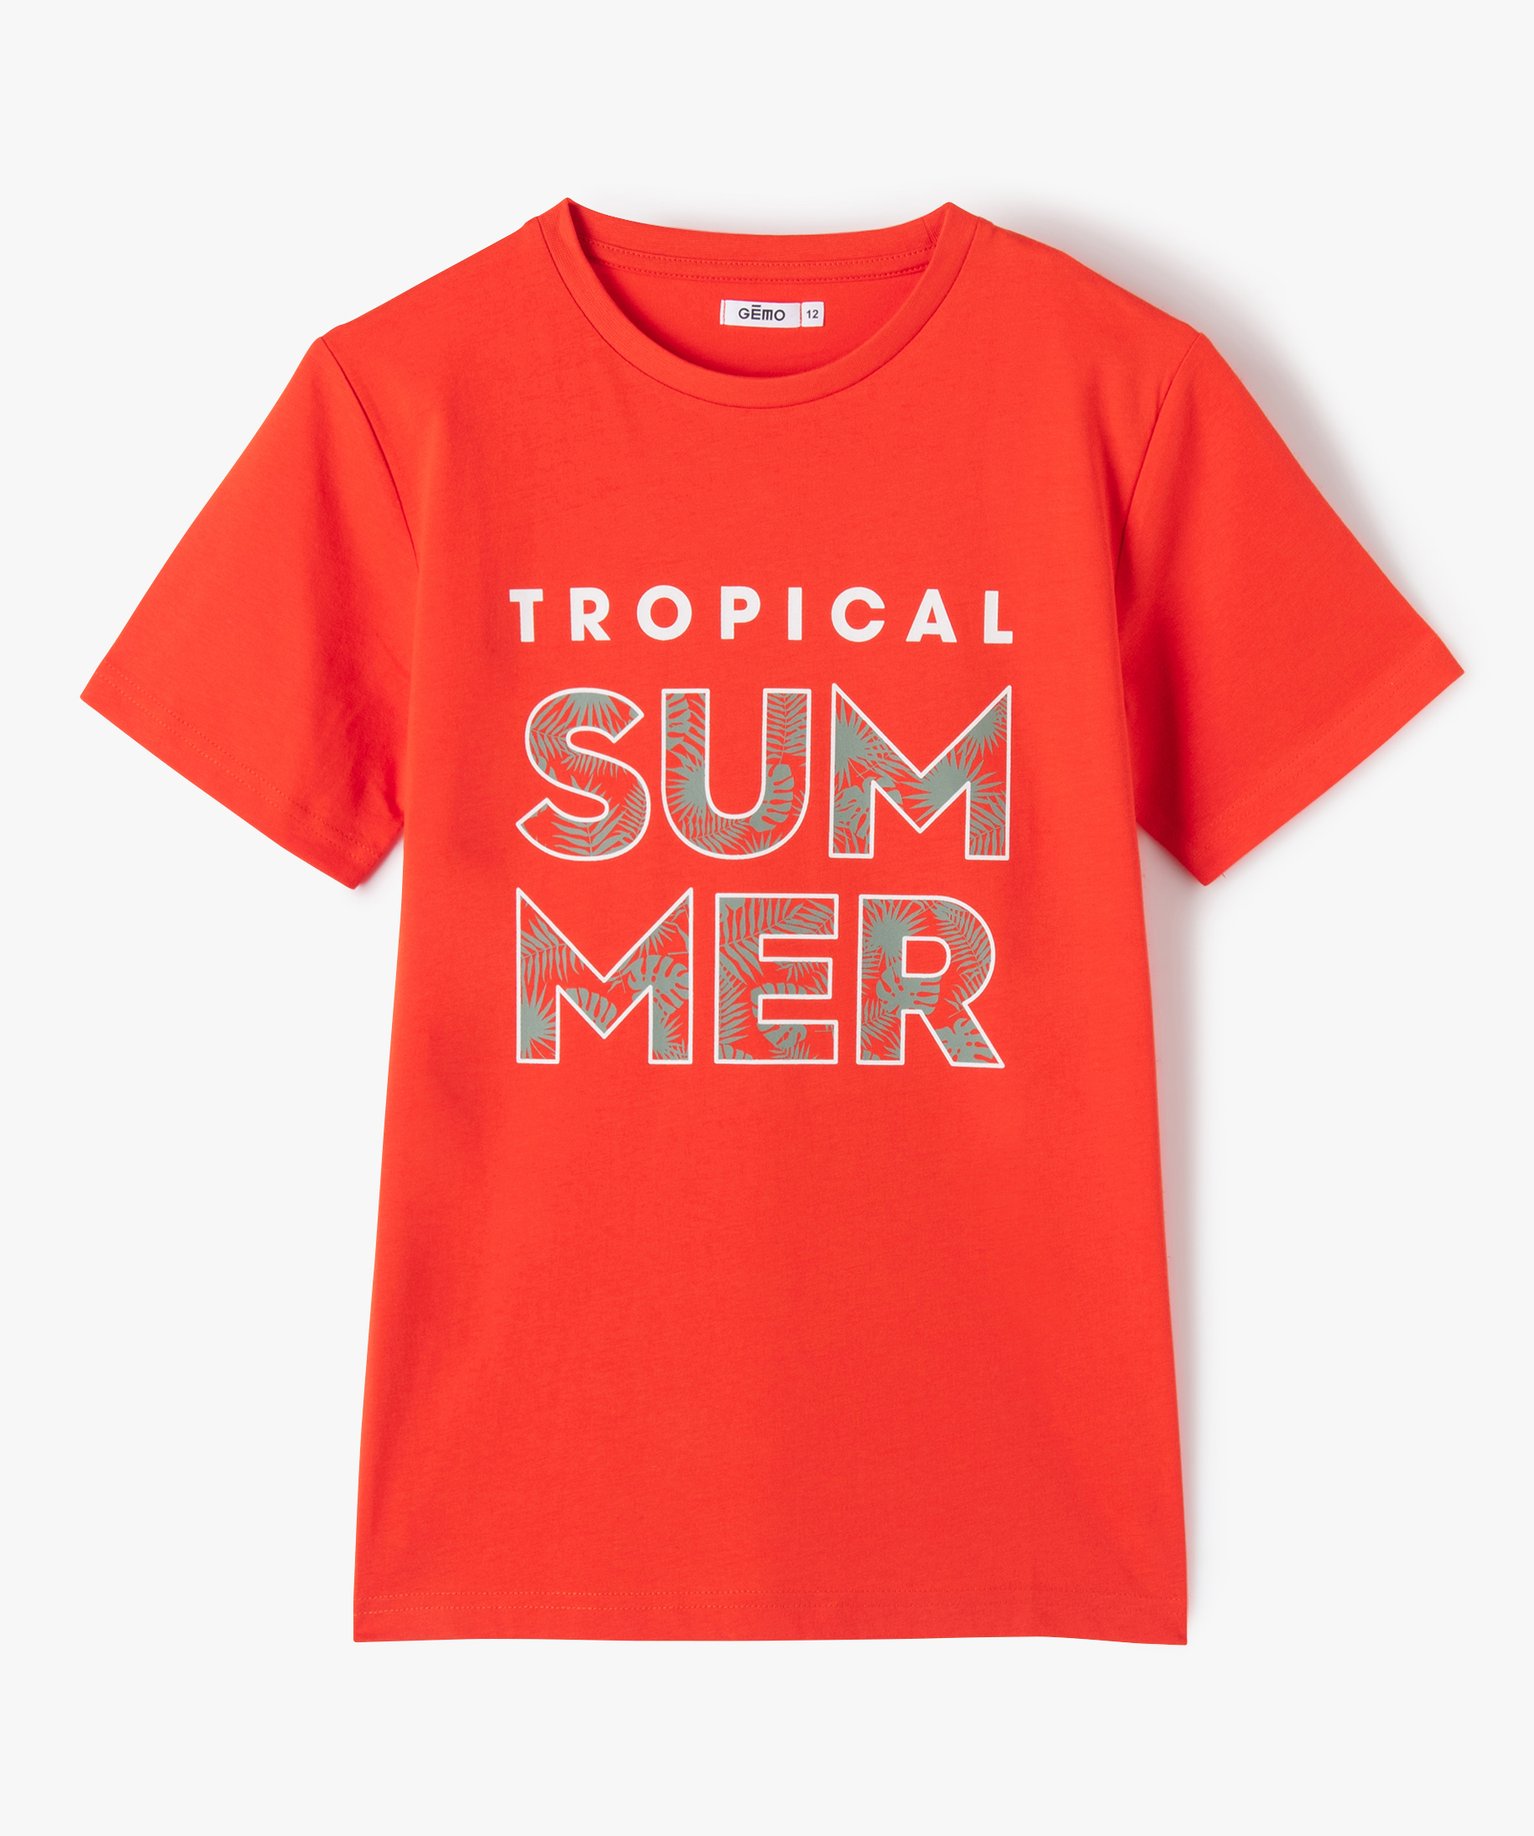 tee-shirt garcon a manches courtes a motif tropical rouge tee-shirts